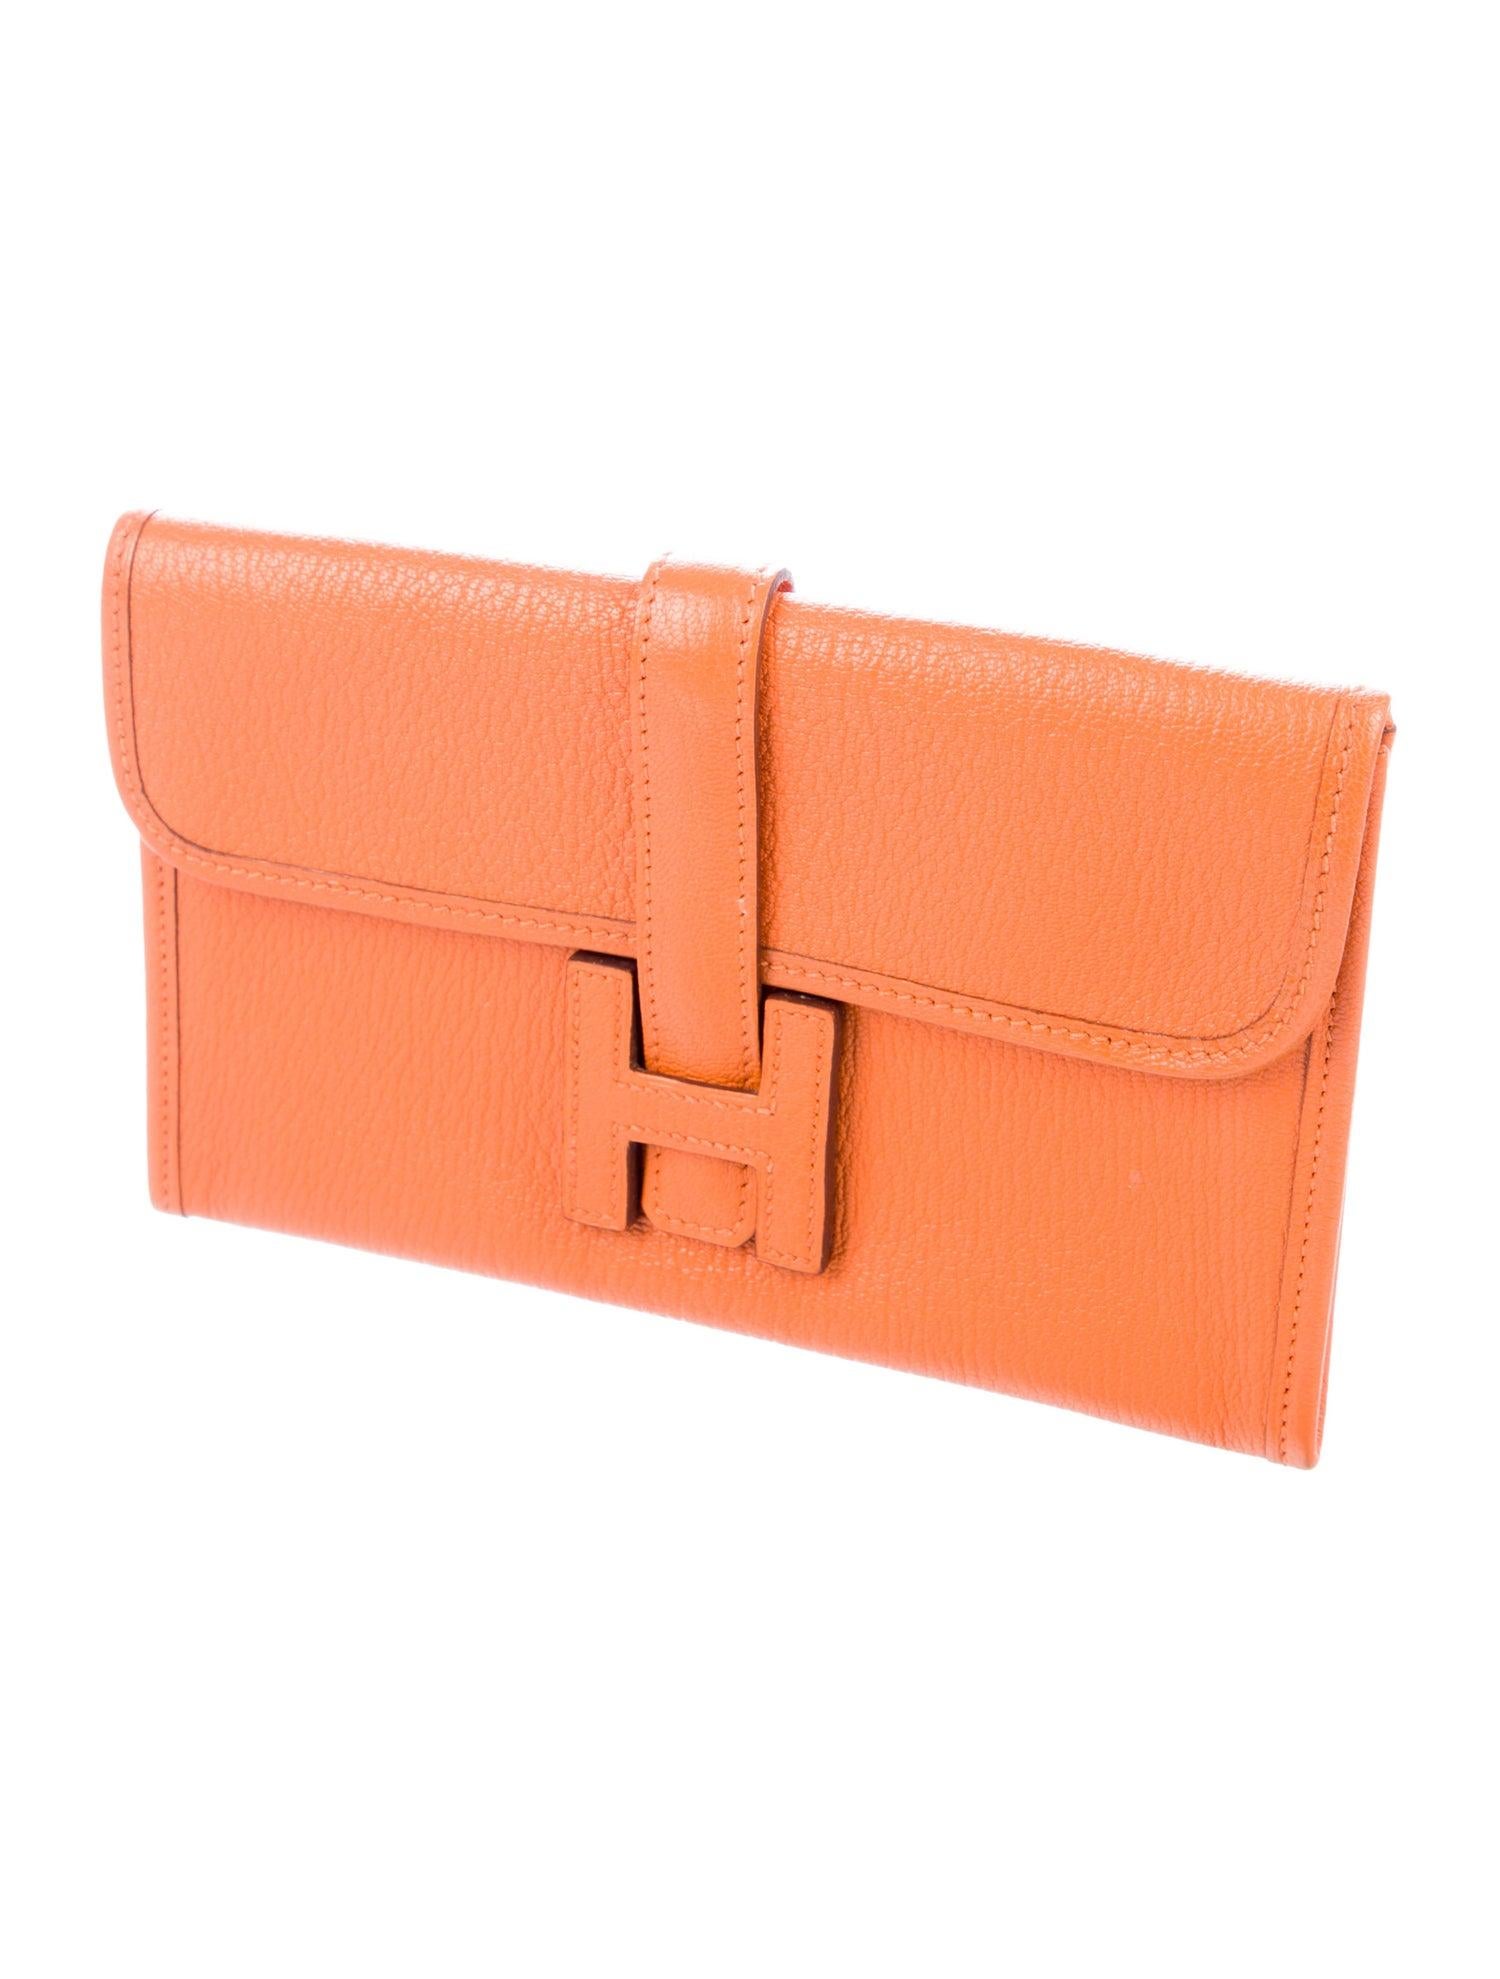 small orange clutch bag